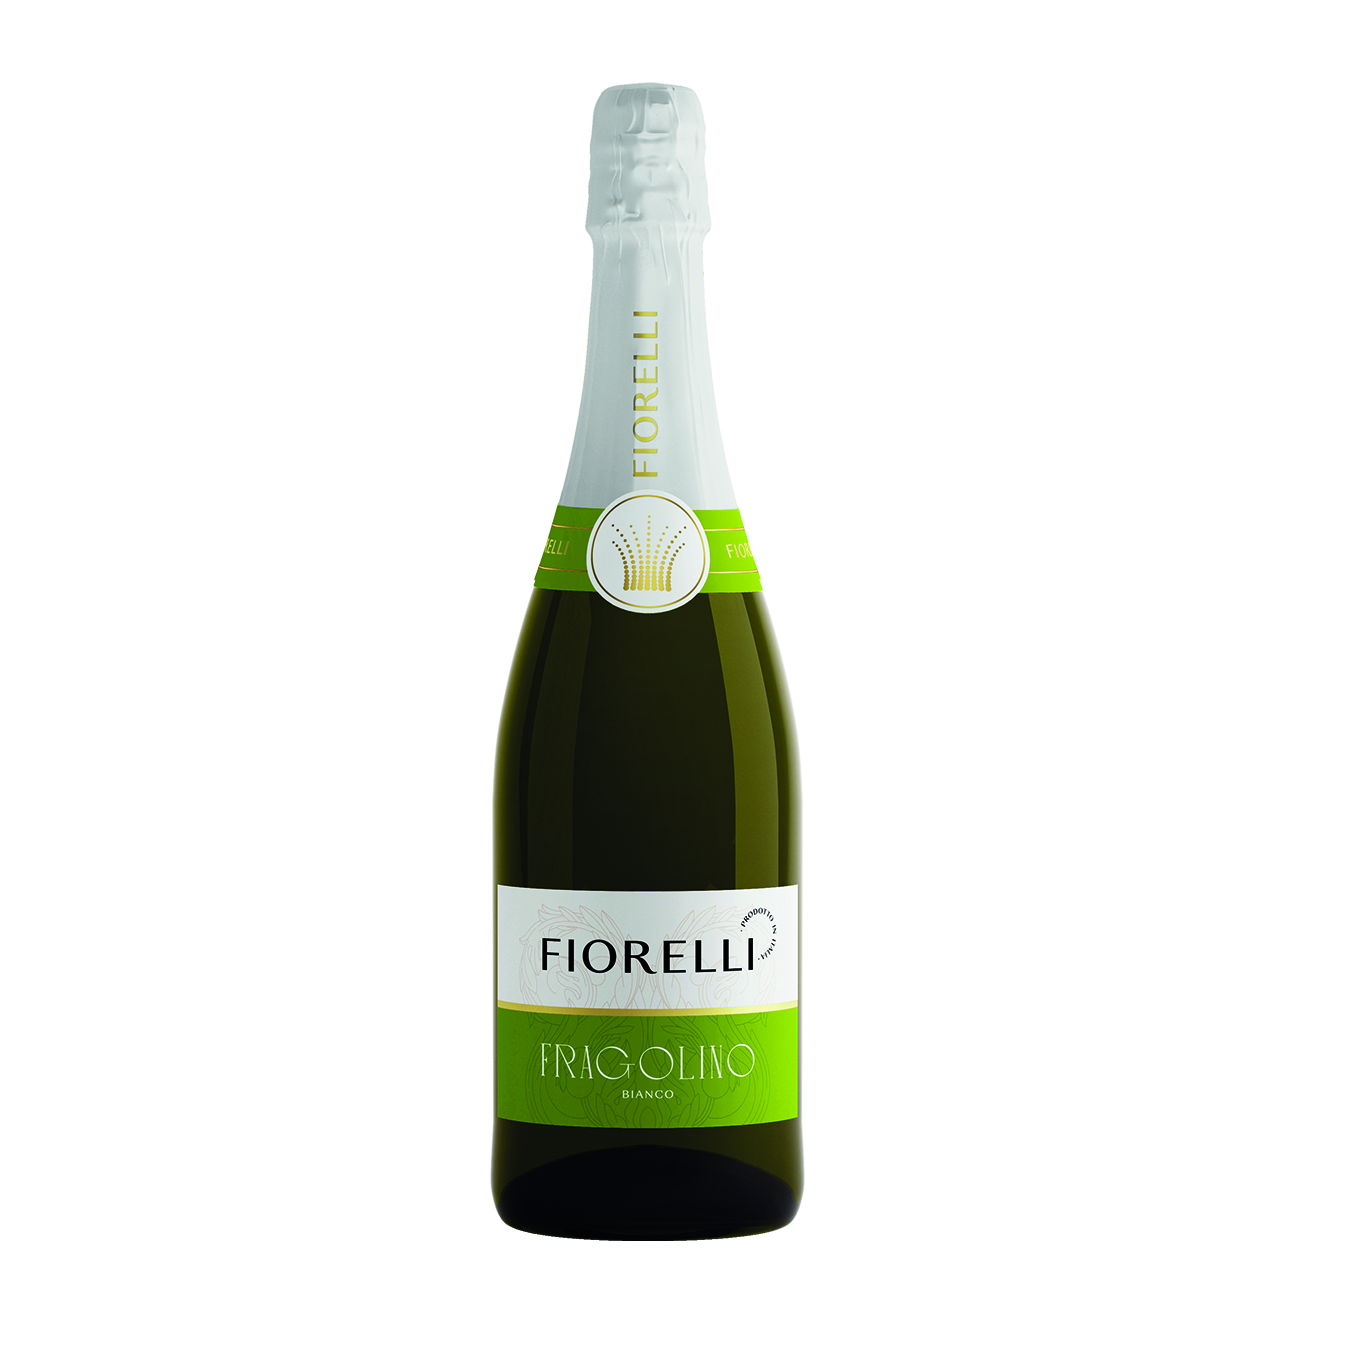 Напиток Fiorelli Fragolino Bianco ароматизированный на основе вина 7% 0,75